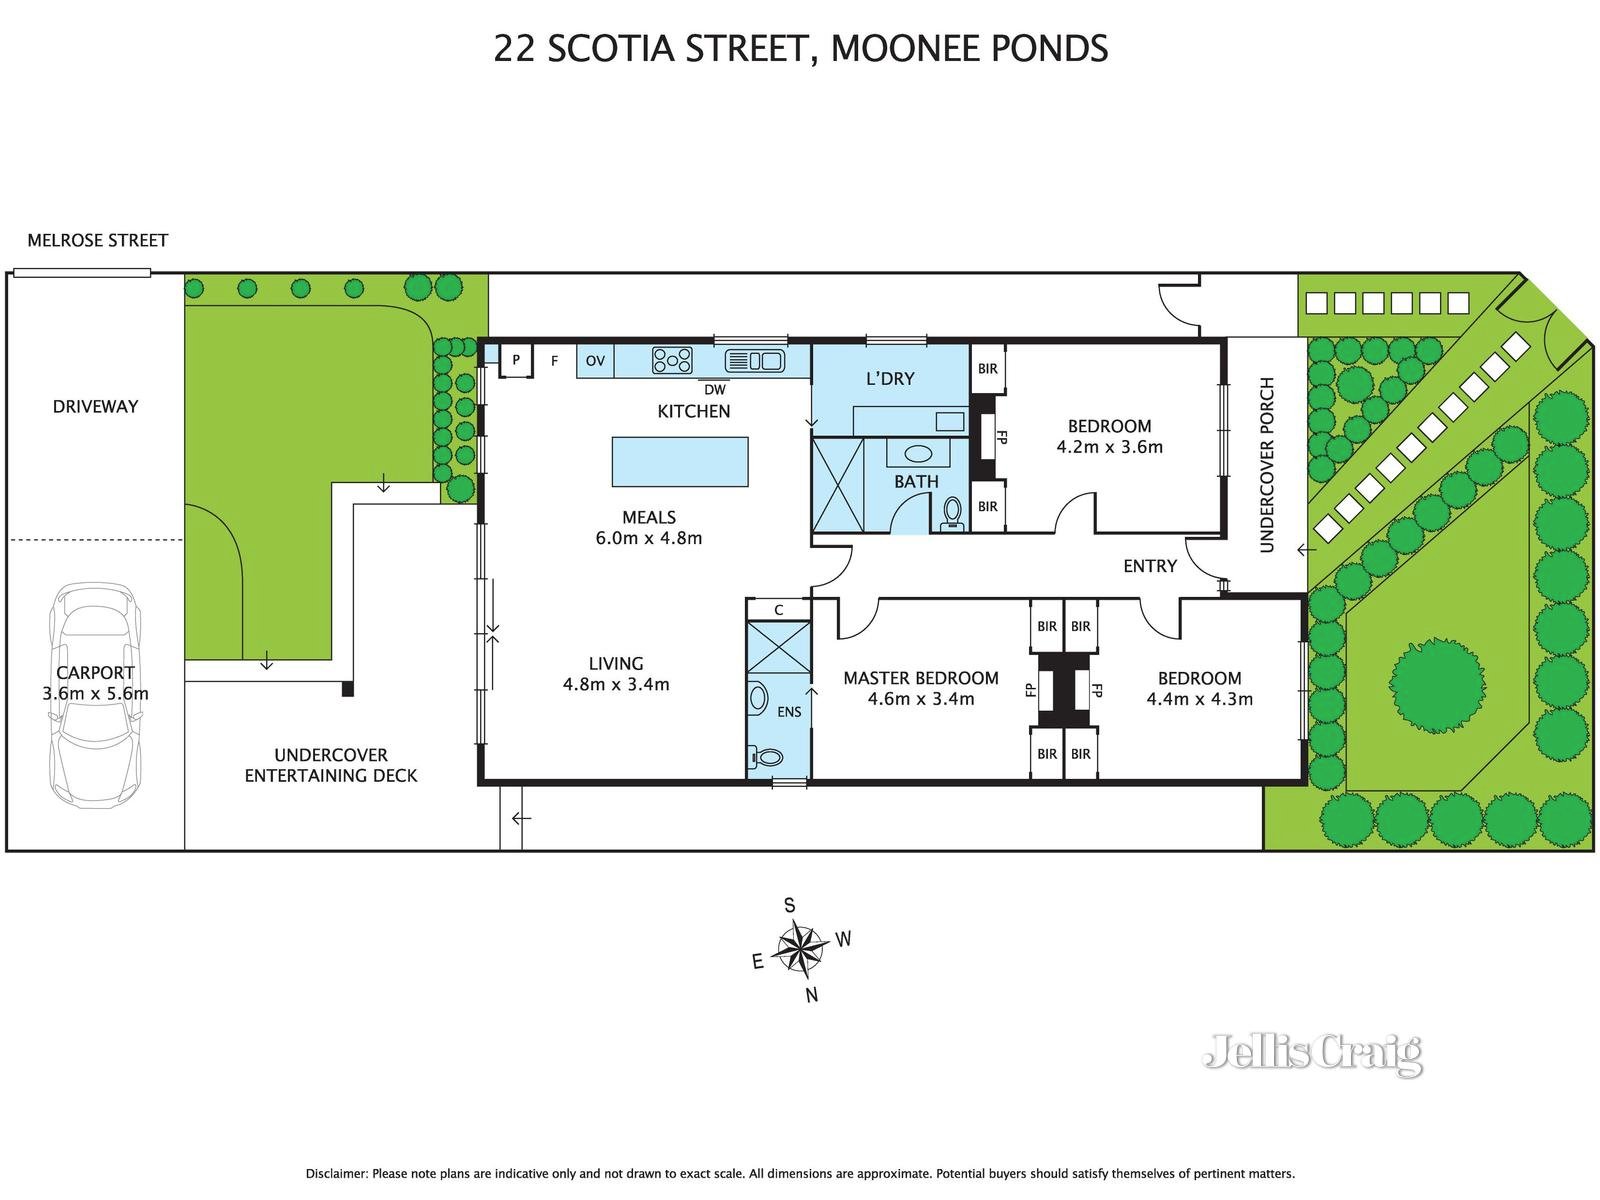 22 Scotia Street, Moonee Ponds image 9